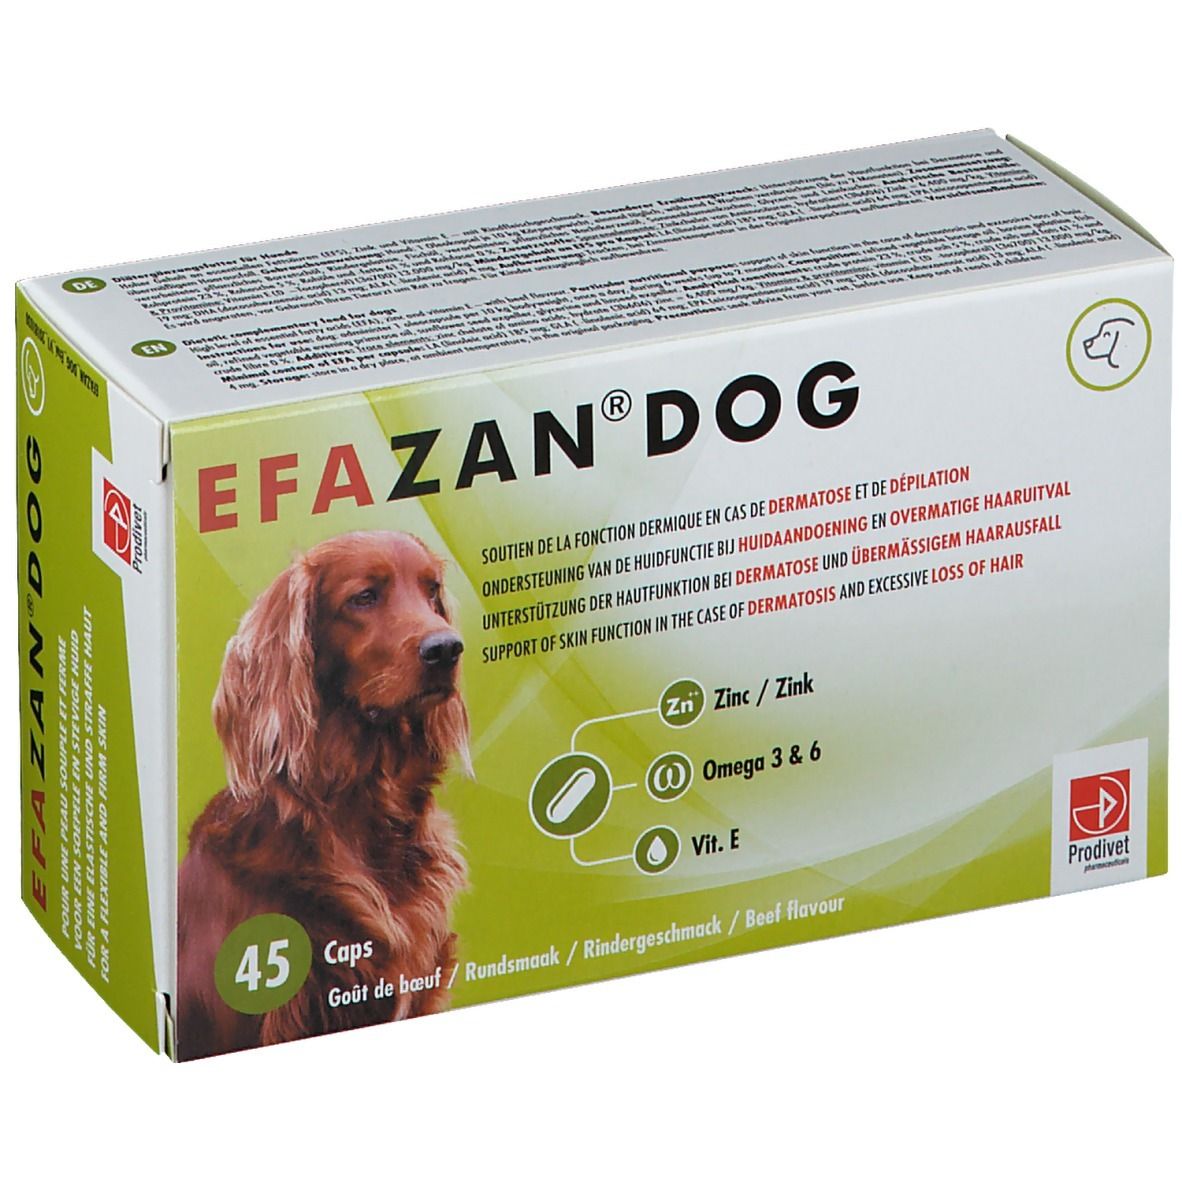 EFAZAN® DOG